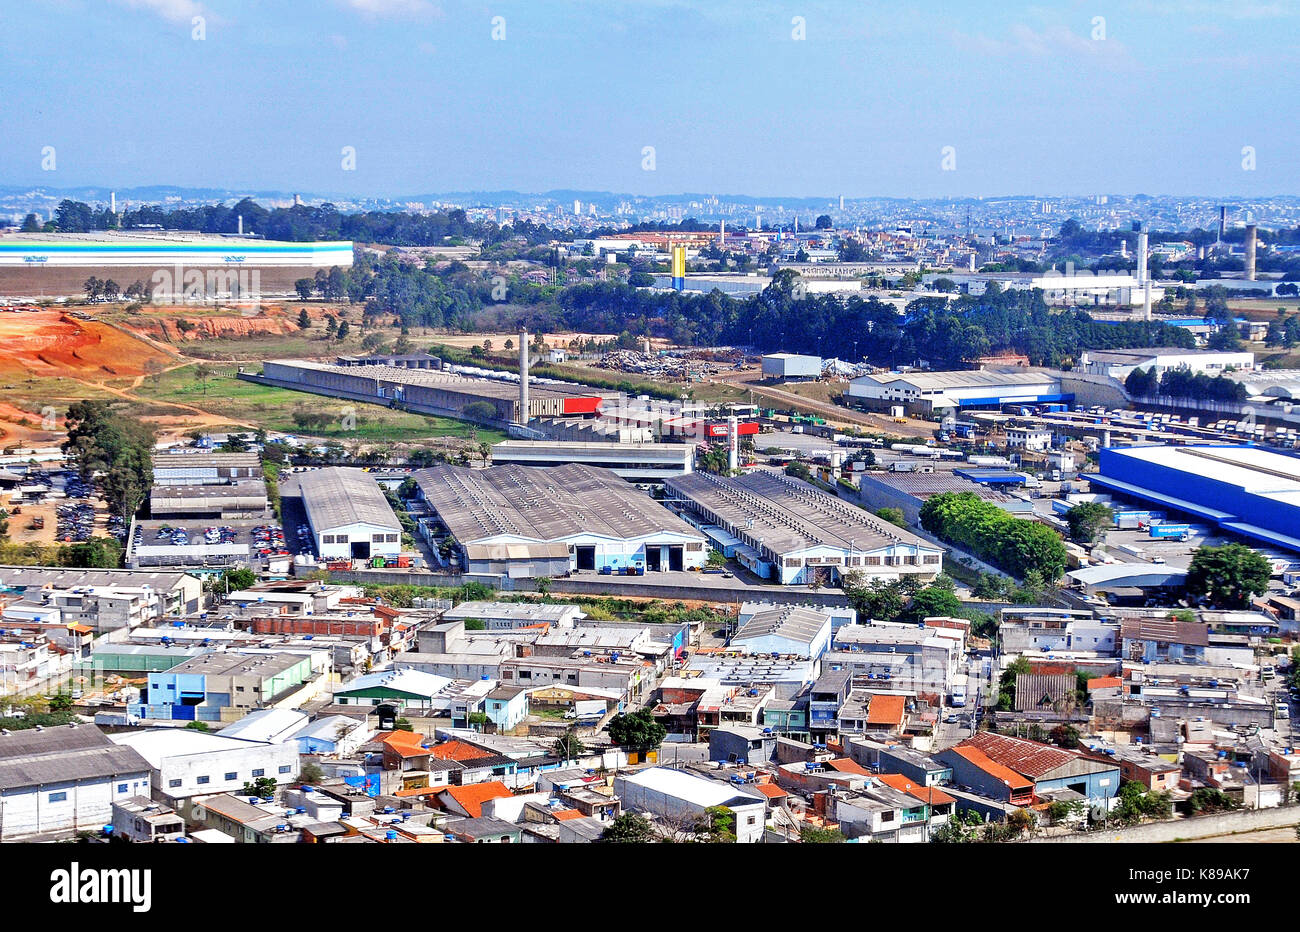 Industriegebiet in der Nähe des Flughafens Guarulhos, Sao Paulo, Brasilien  Stockfotografie - Alamy